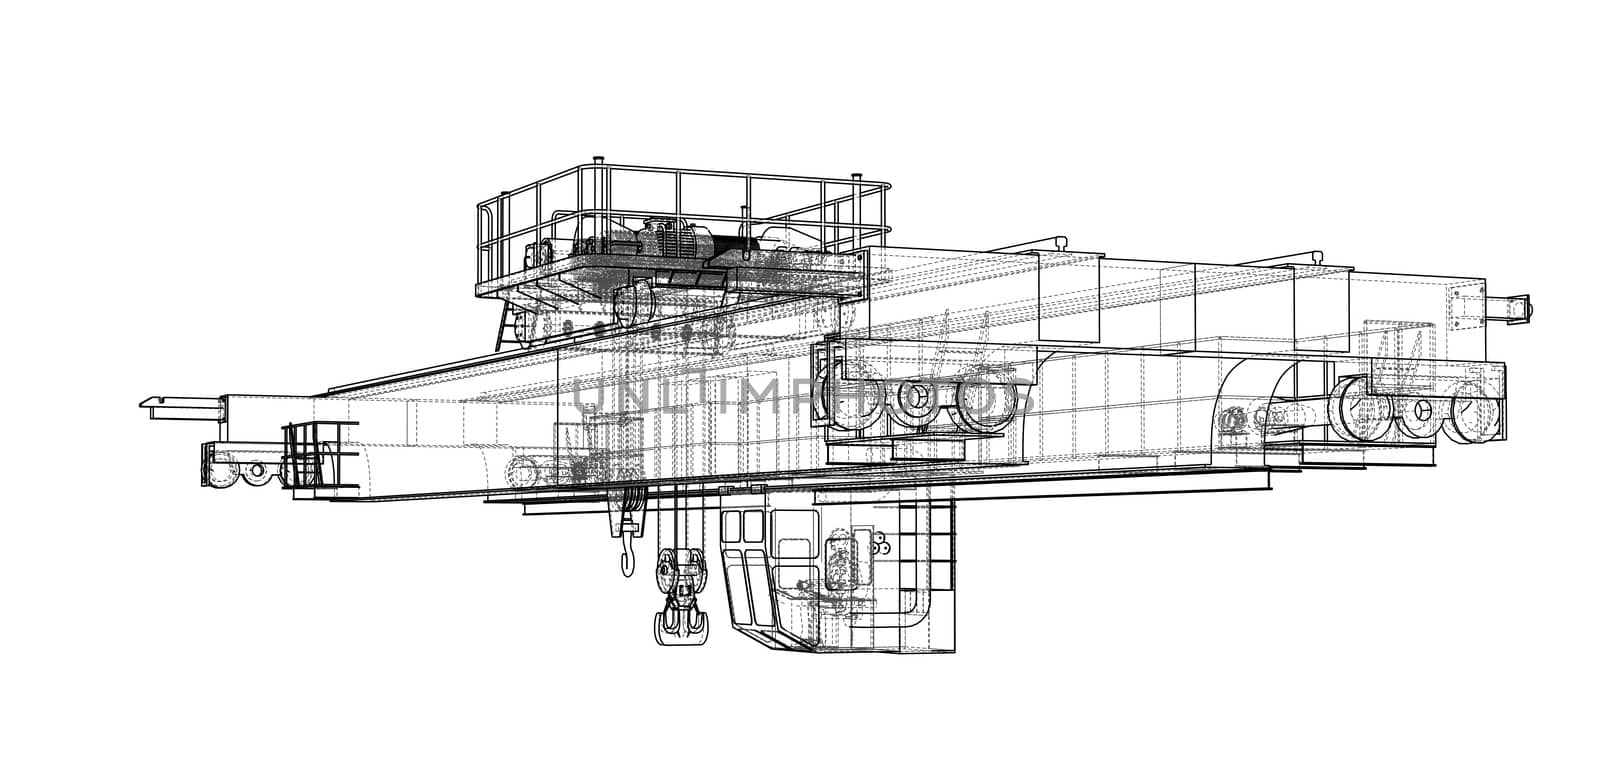 Overhead crane sketch. 3d illustration. Wire-frame style